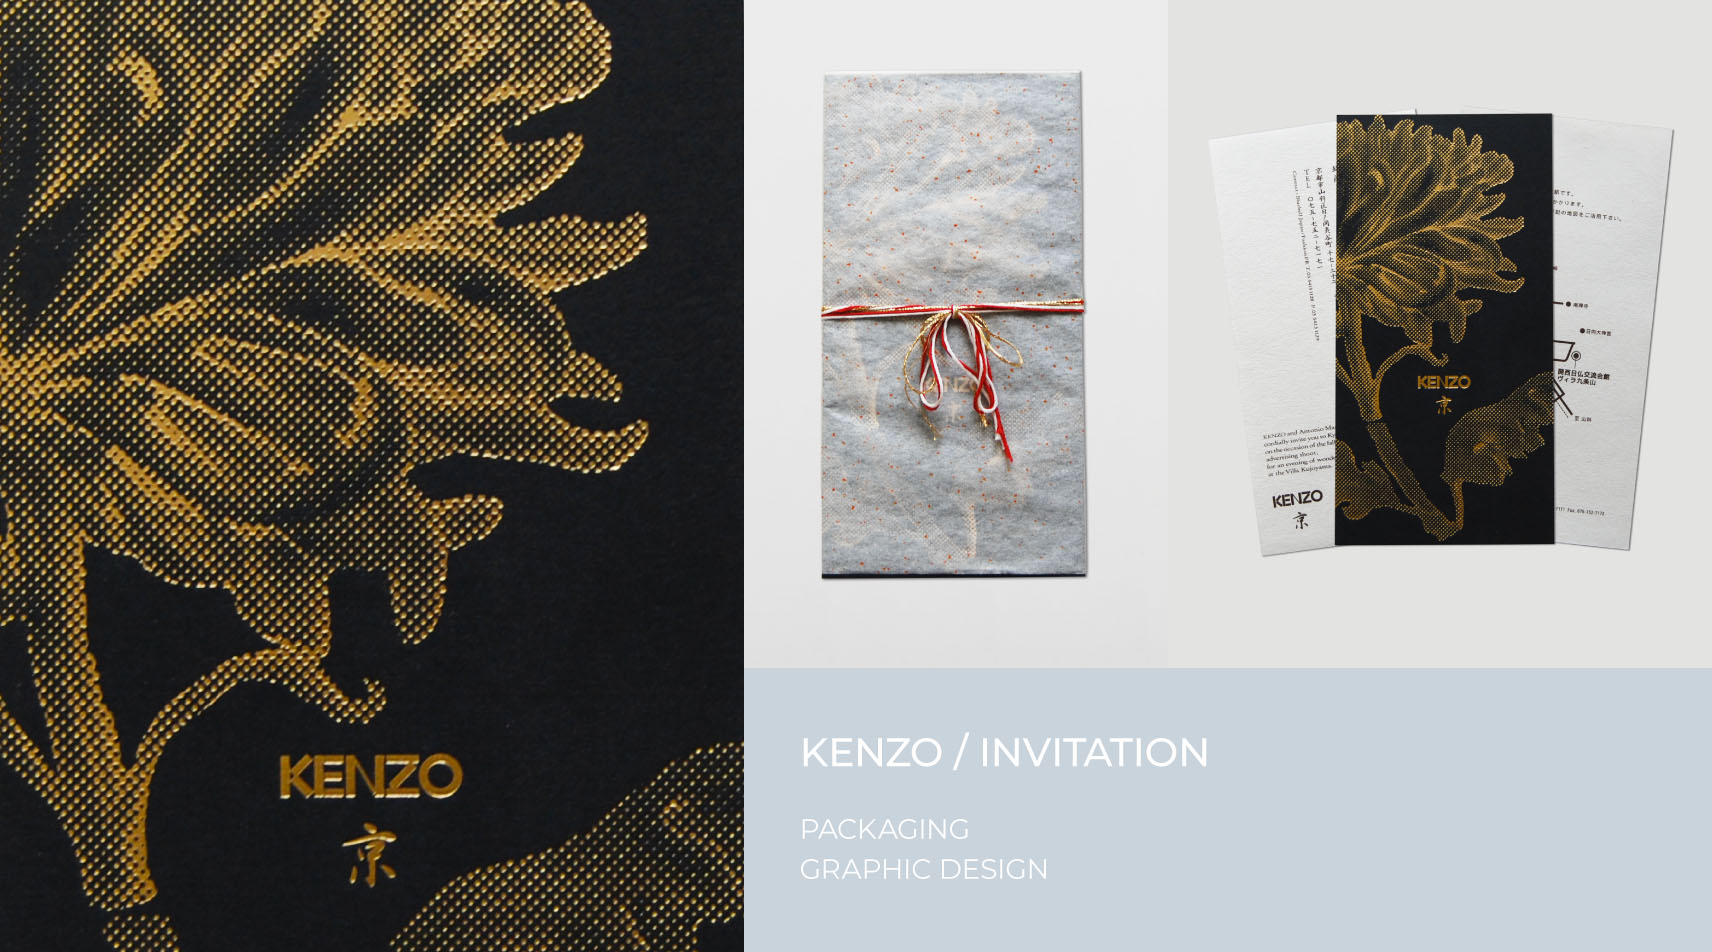 KENZO / INVITATION - PACKAGING GRAPHIC DESIGN